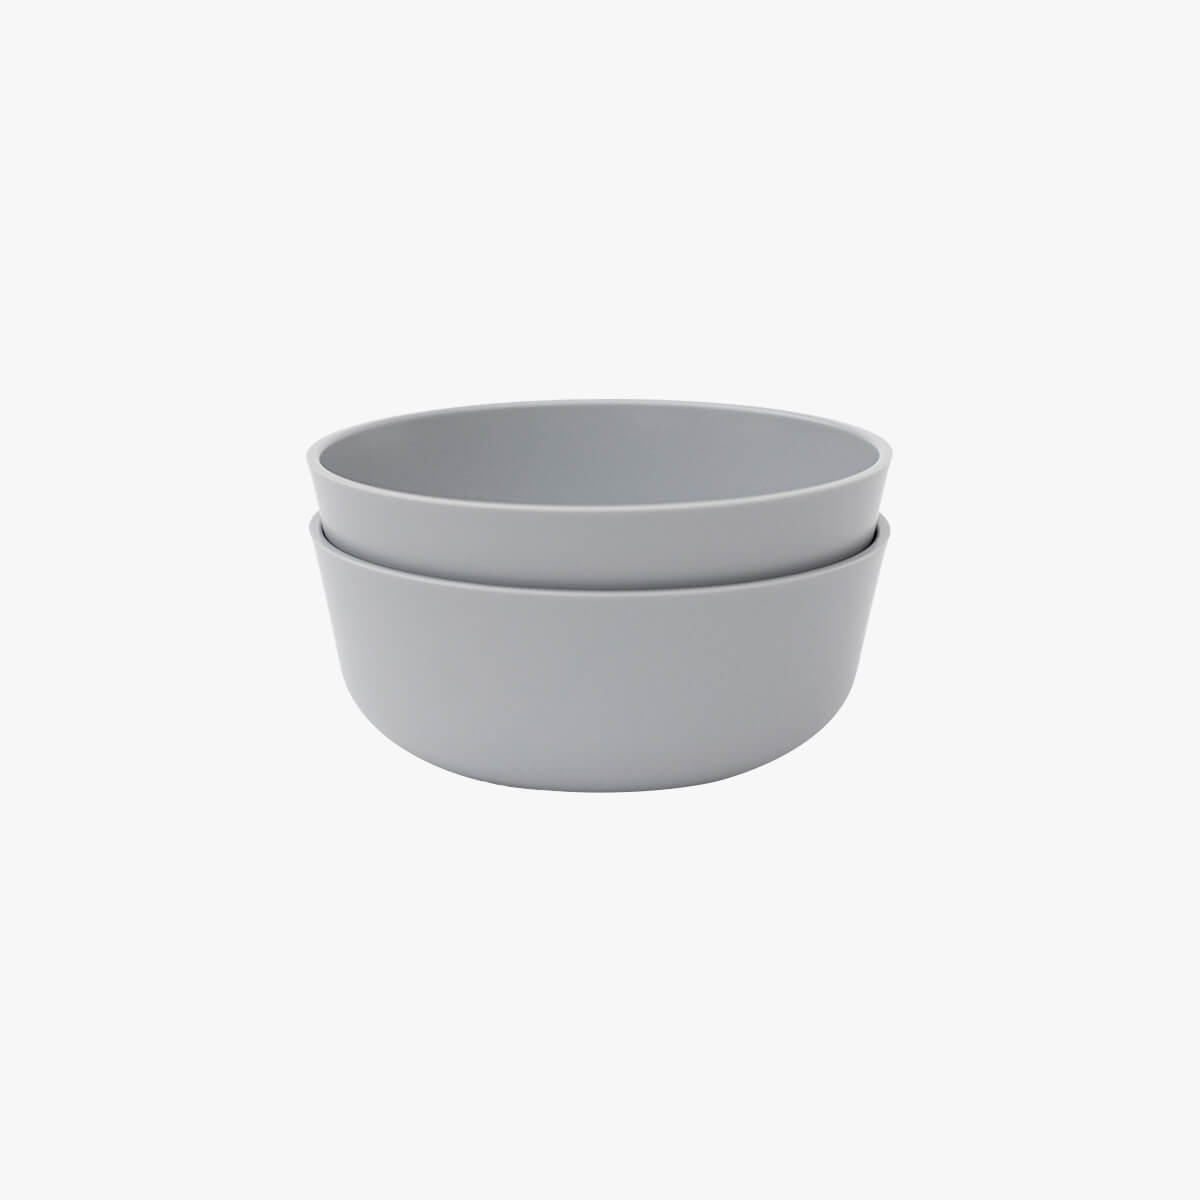 Mealtime Bowl in Pewter / ezpz Basics Line / Stylish Bowls for Big Kids